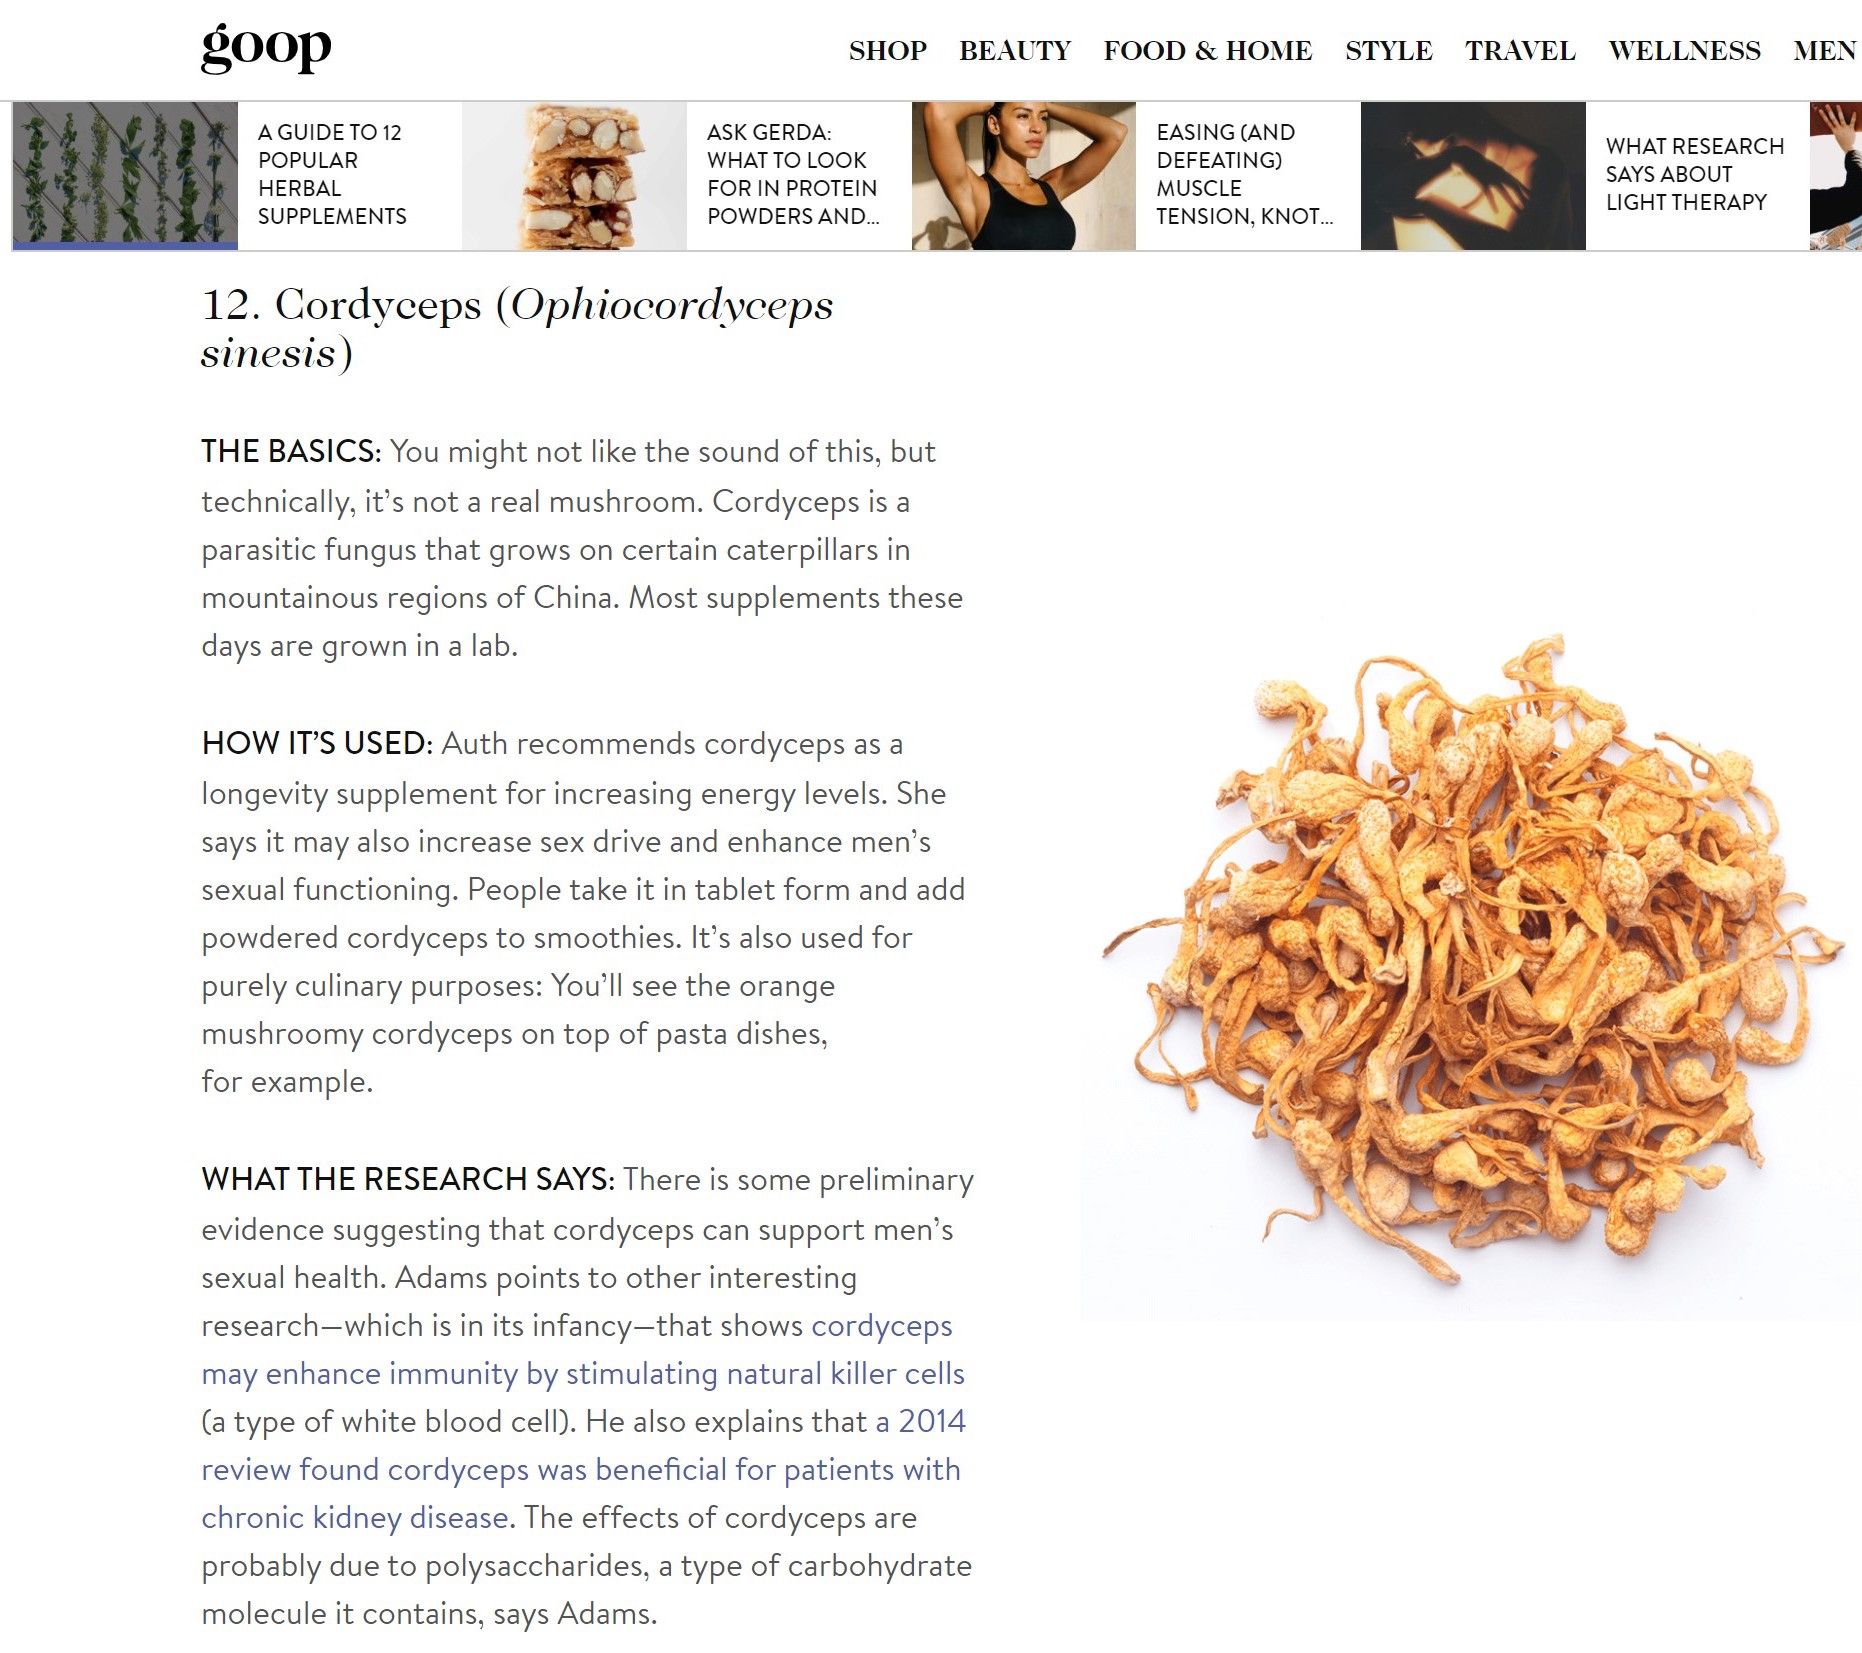 Description of Cordyceps mushrooms on GOOP lifestyle website